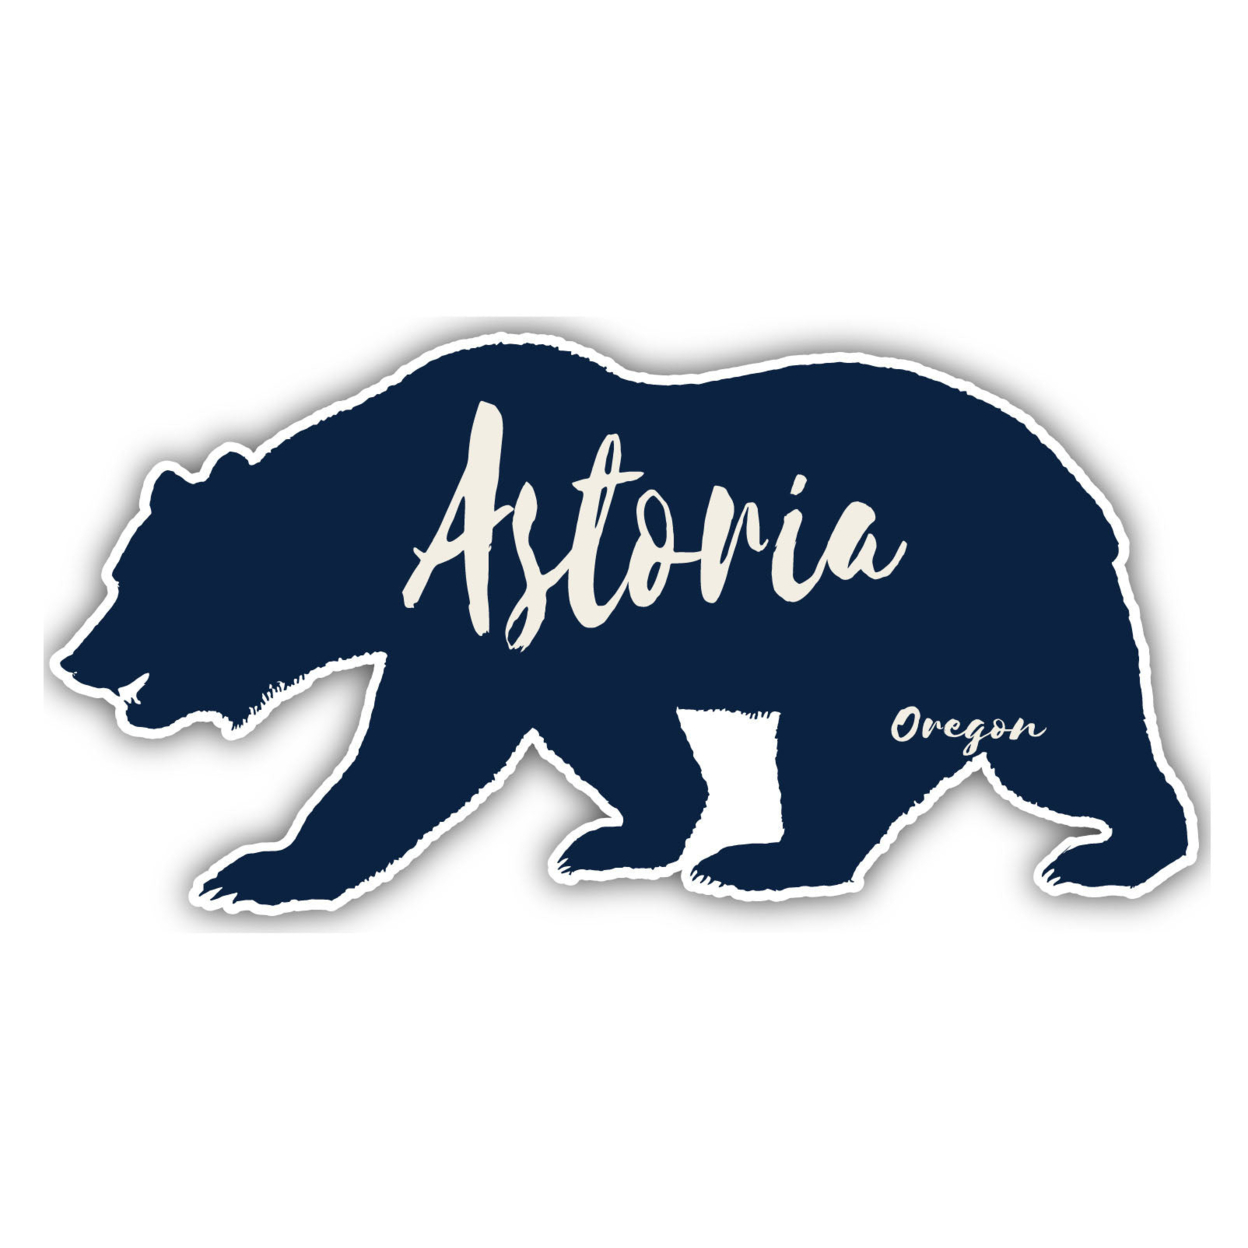 Astoria Oregon Souvenir Decorative Stickers (Choose Theme And Size) - 4-Pack, 4-Inch, Bear